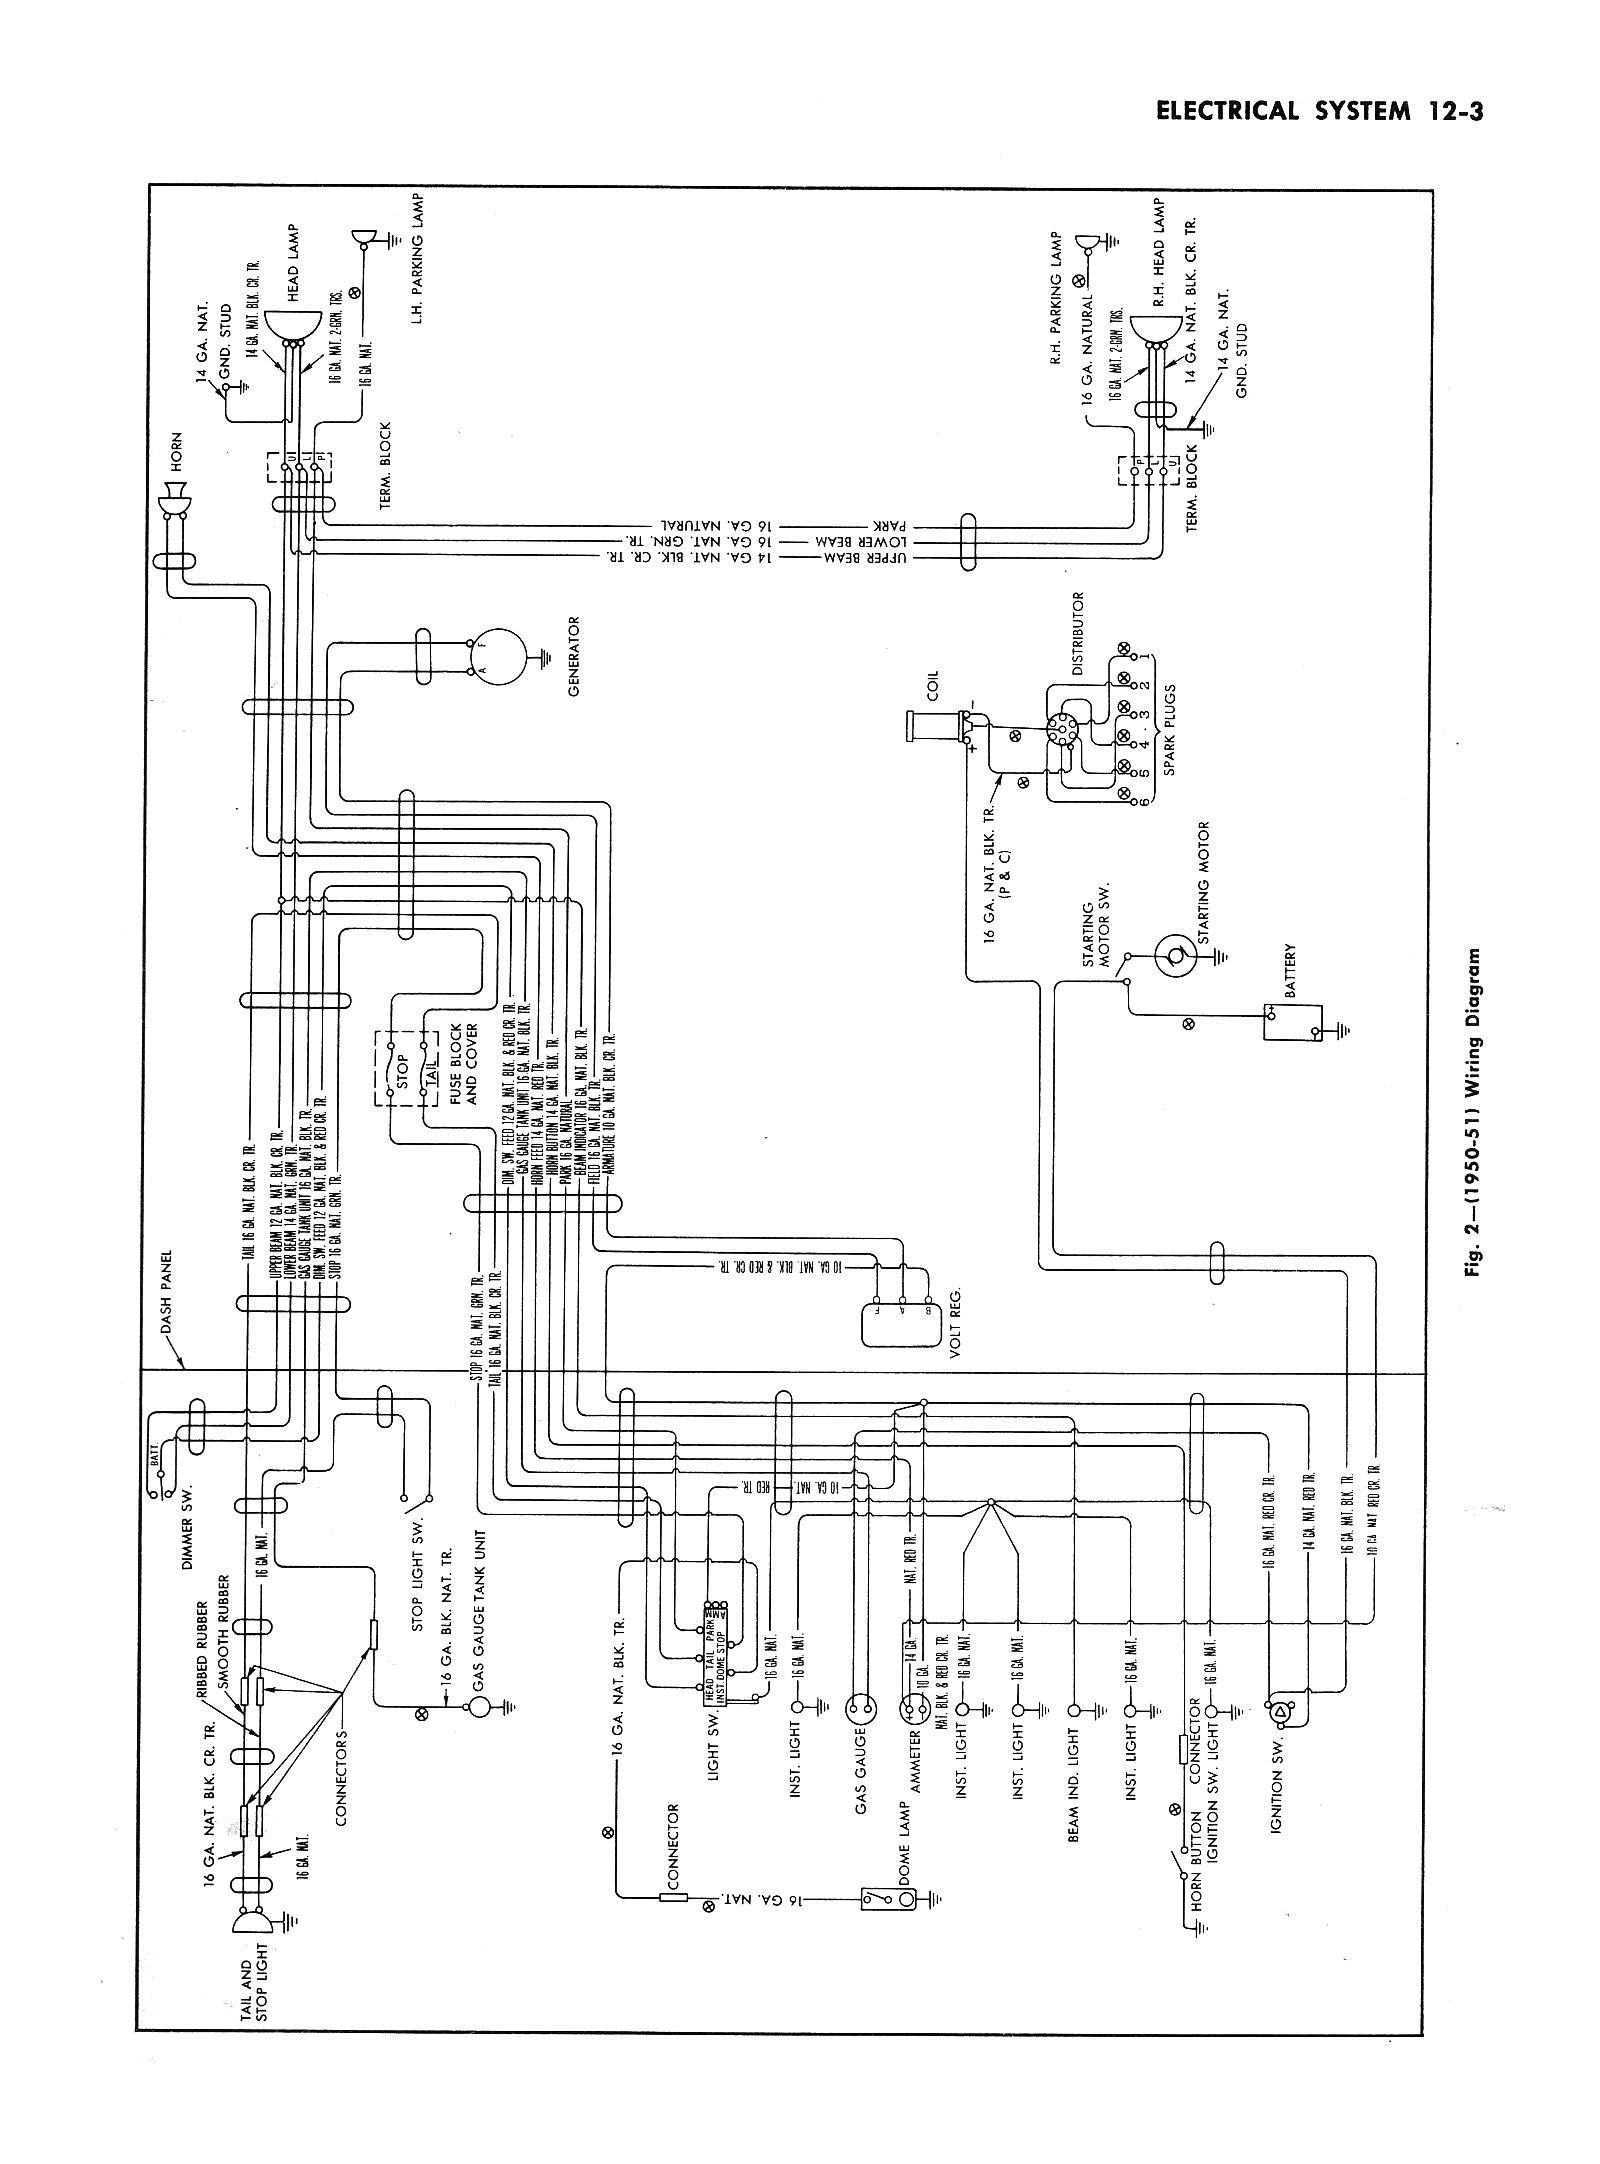 Wiring Diagram 1962 Chevy Truck Chevy Wiring Diagrams Of Wiring Diagram 1962 Chevy Truck